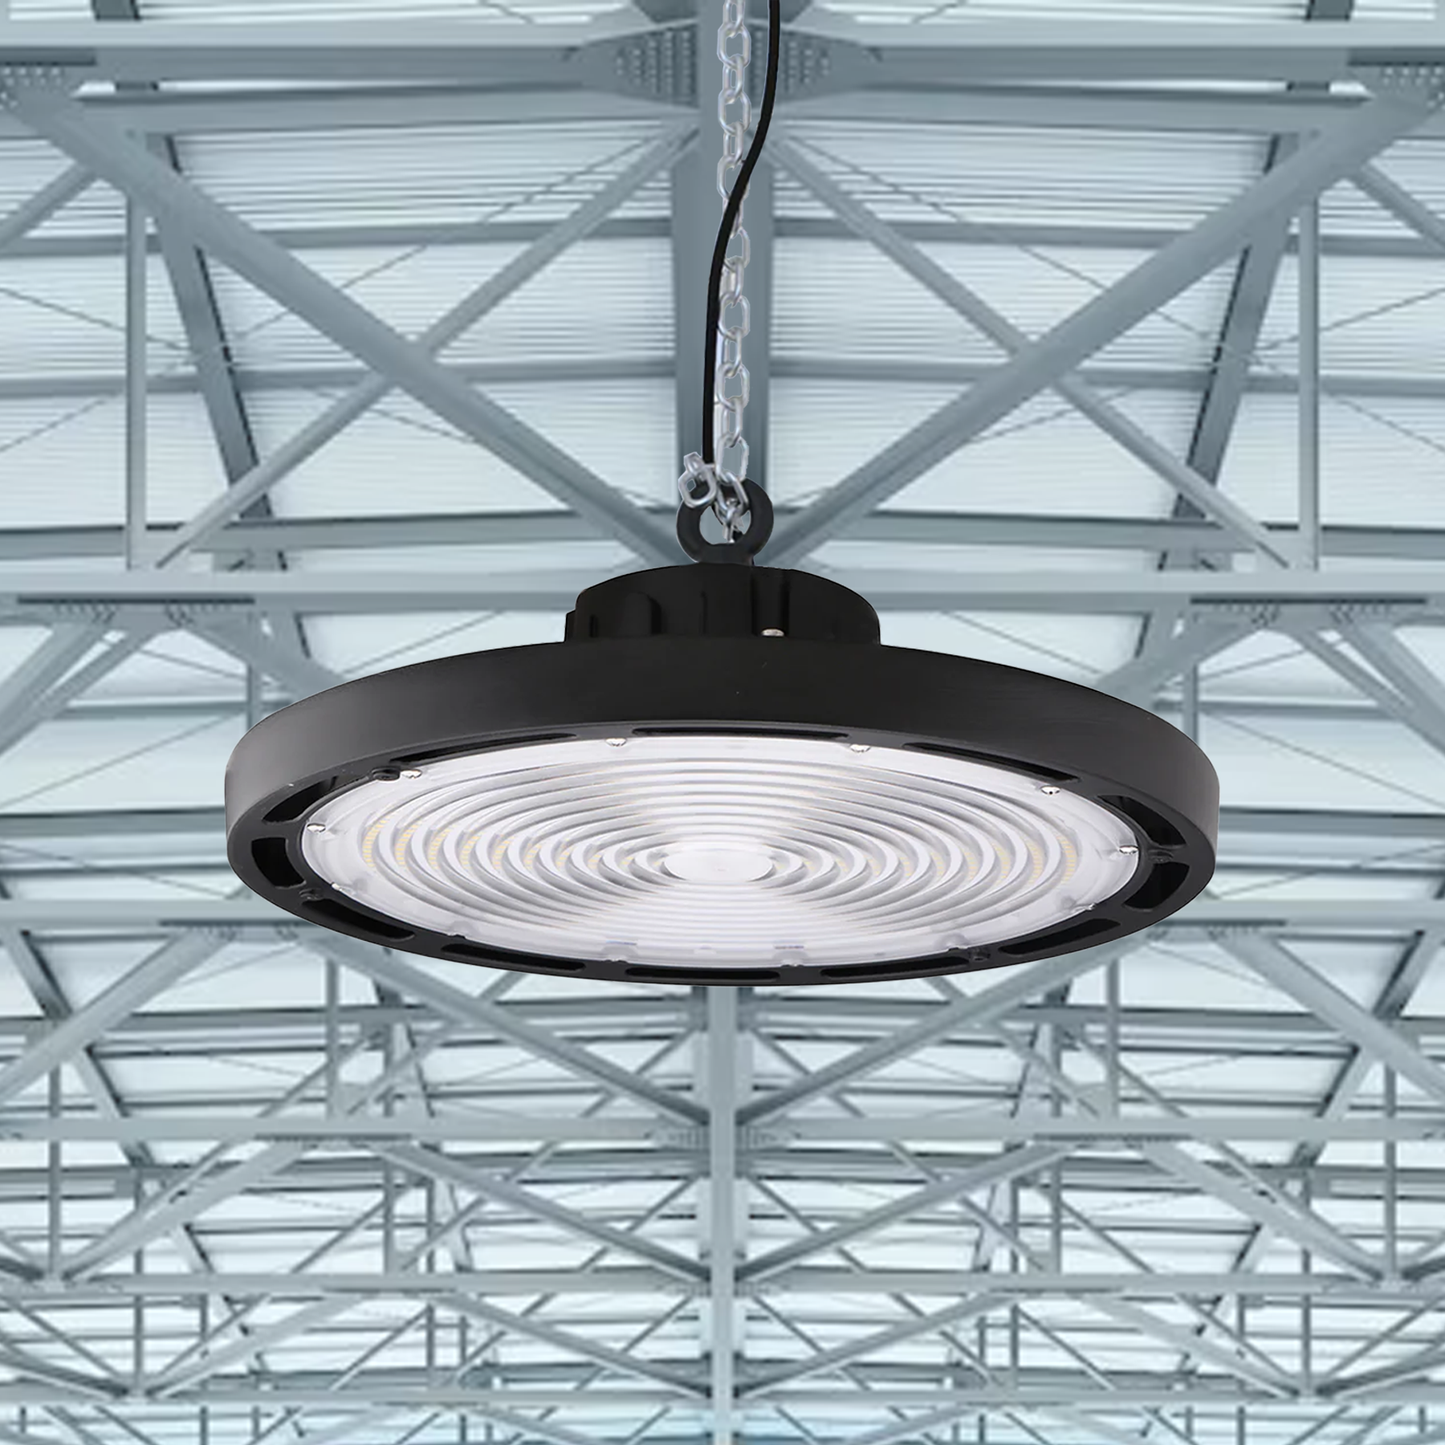 Gen13 UFO LED High Bay Light, 150W, 5700K, 22500LM, Dimmable, UL, DLC Listed, For LED Warehouse Lights Commercial Shop Workshop Garage Factory Lighting Fixture